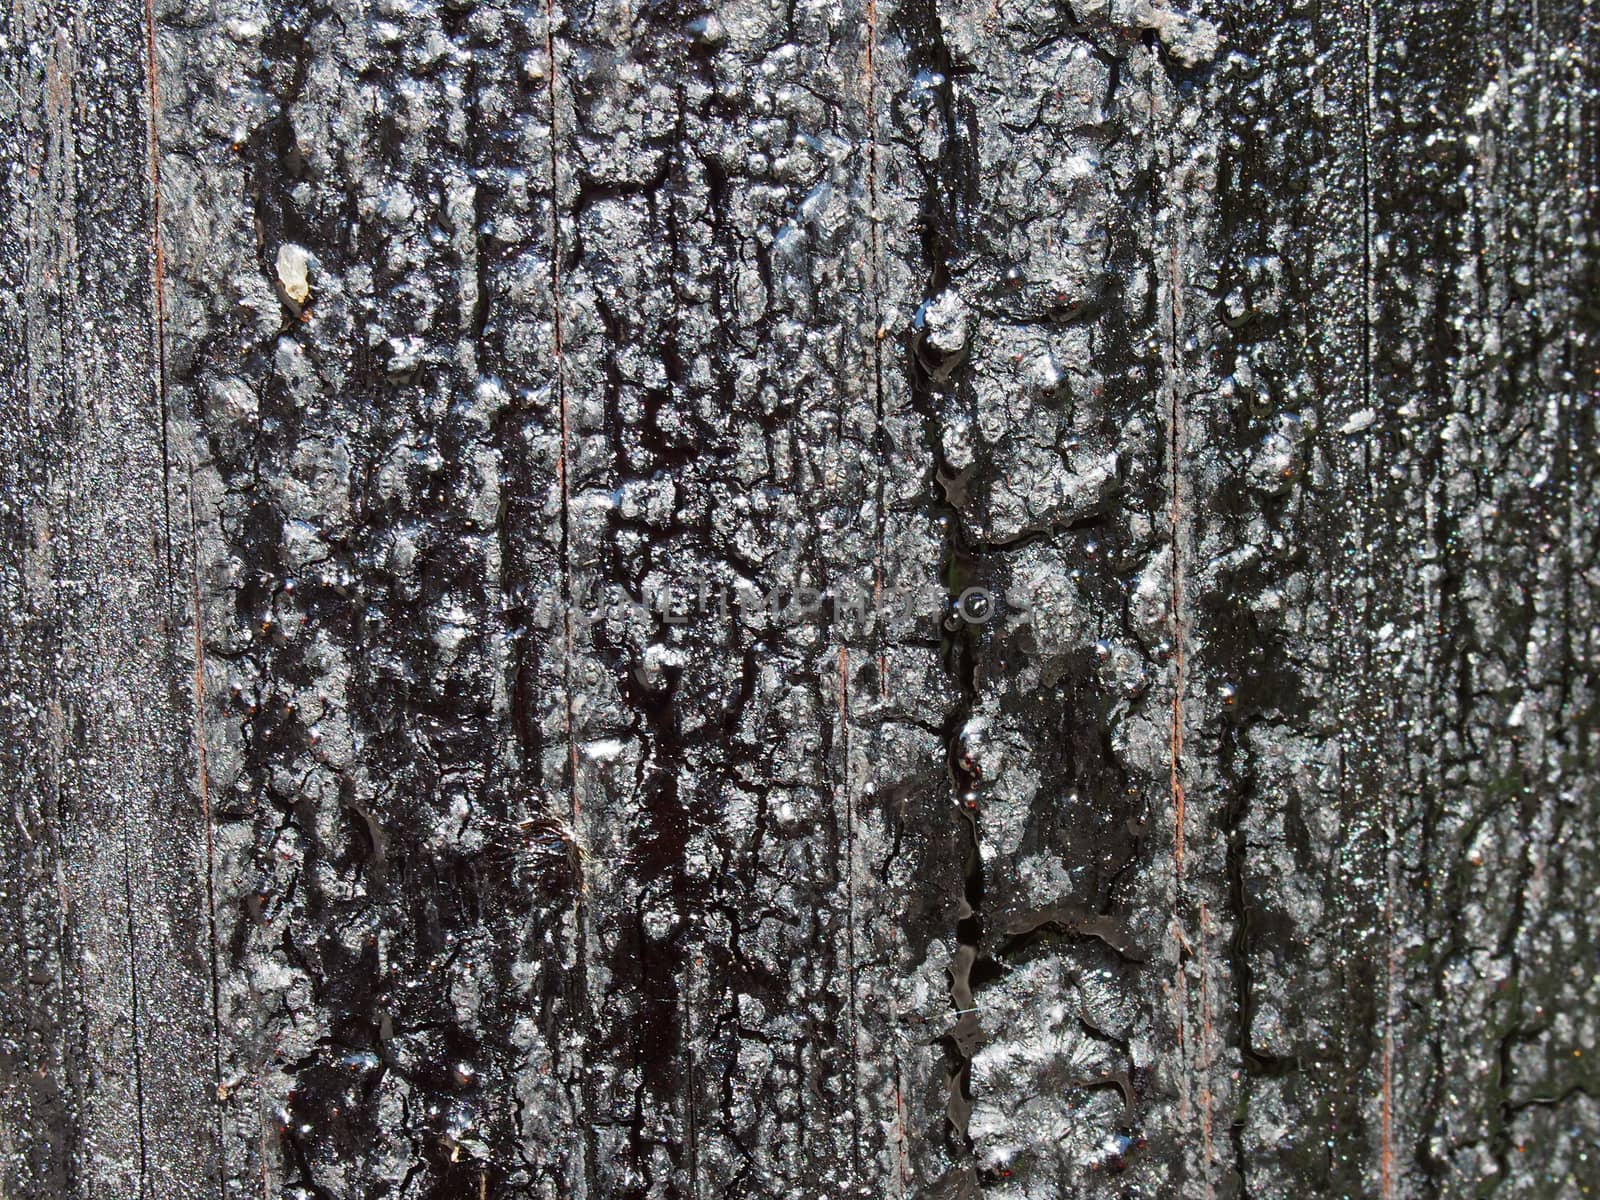 a black melting old bitumen preservative covered textured timber surface